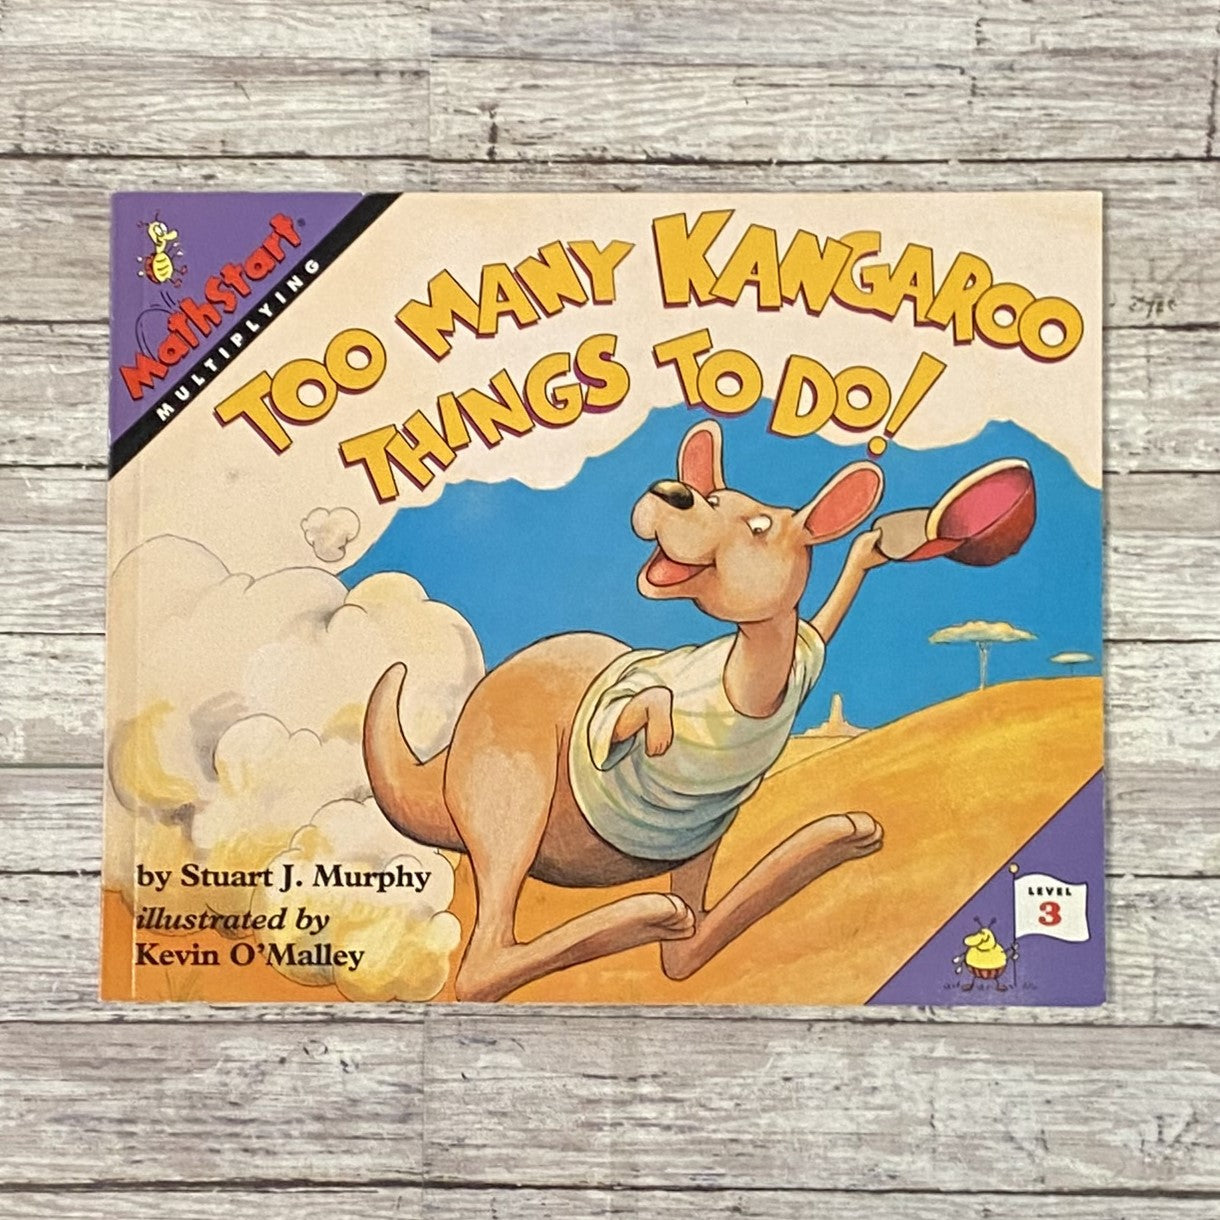 Too Many Kangaroo Things to Do! - Anchored Homeschool Resource Center